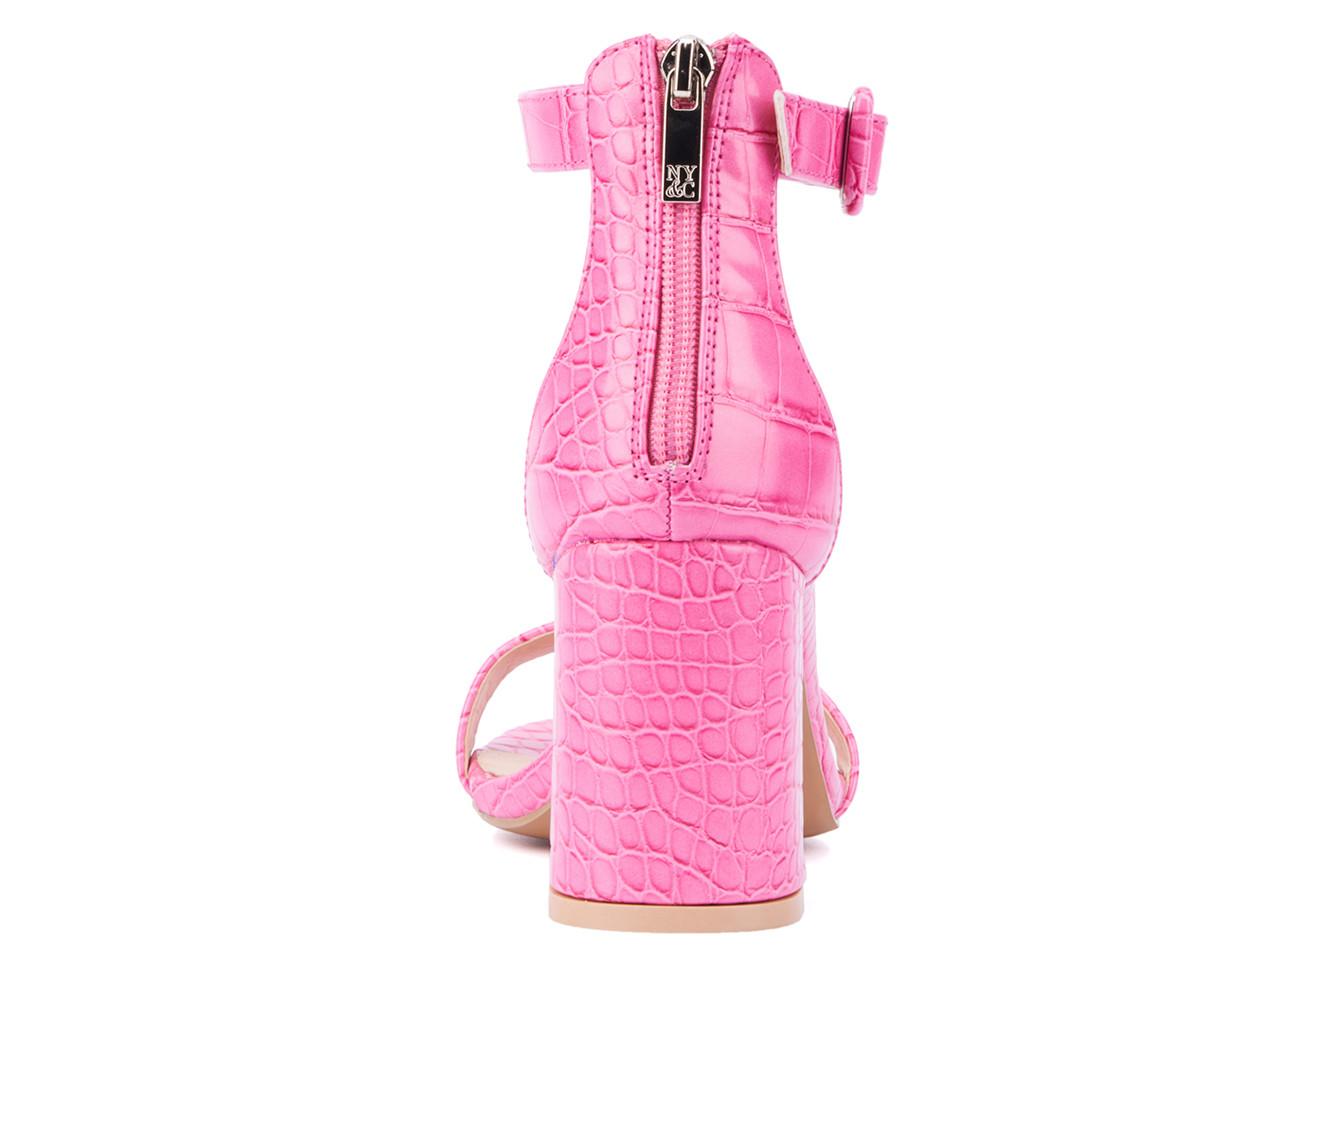 Women's New York and Company Lulu Dress Sandals